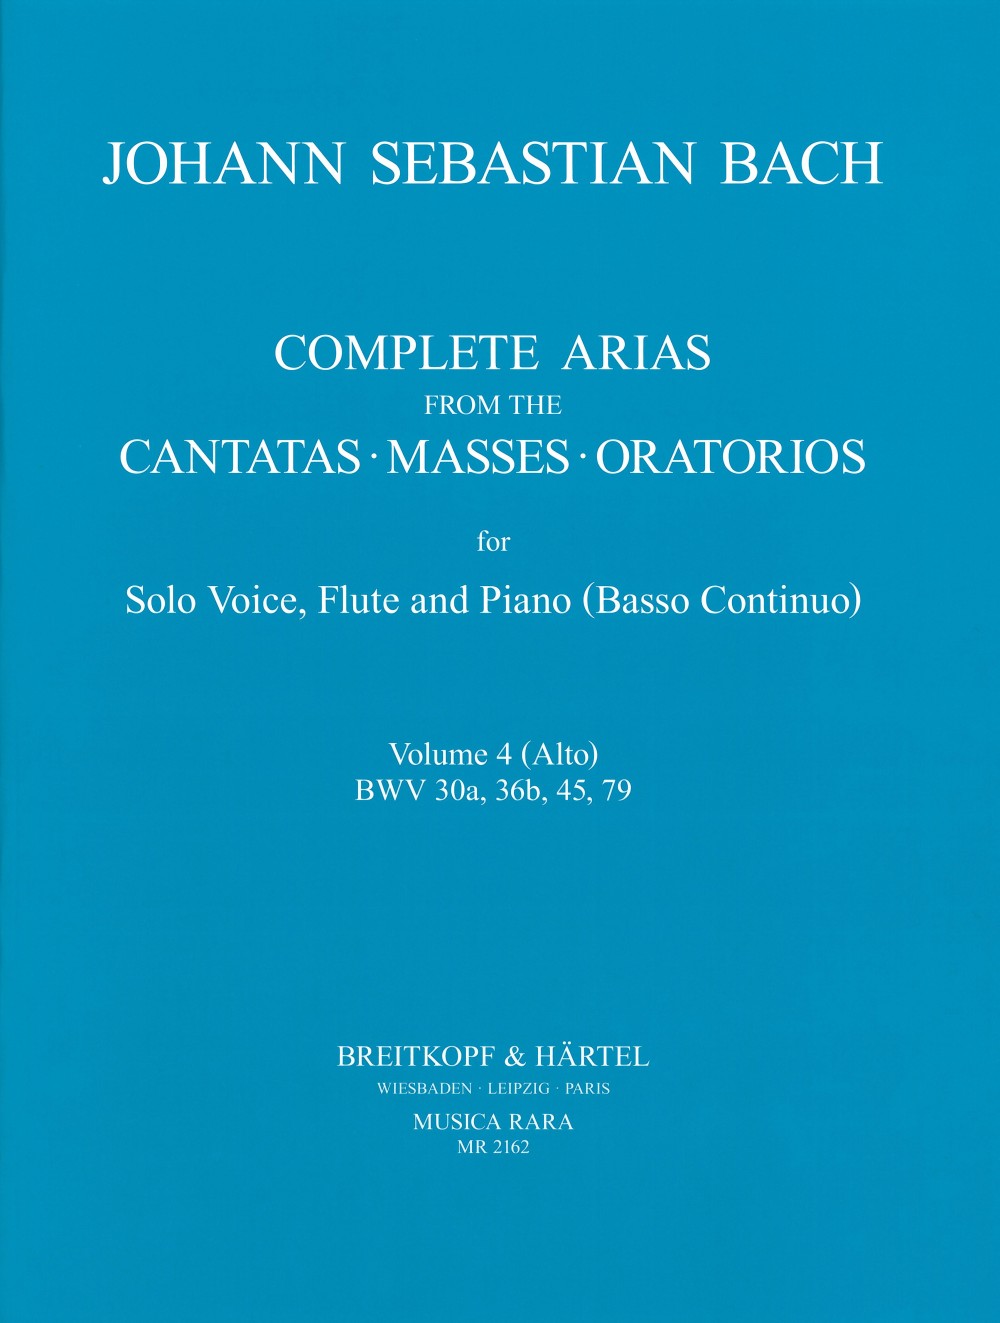 Bach: Complete Arias - Volume 4 (Alto - BWV 30a, 36b, 45, 79)